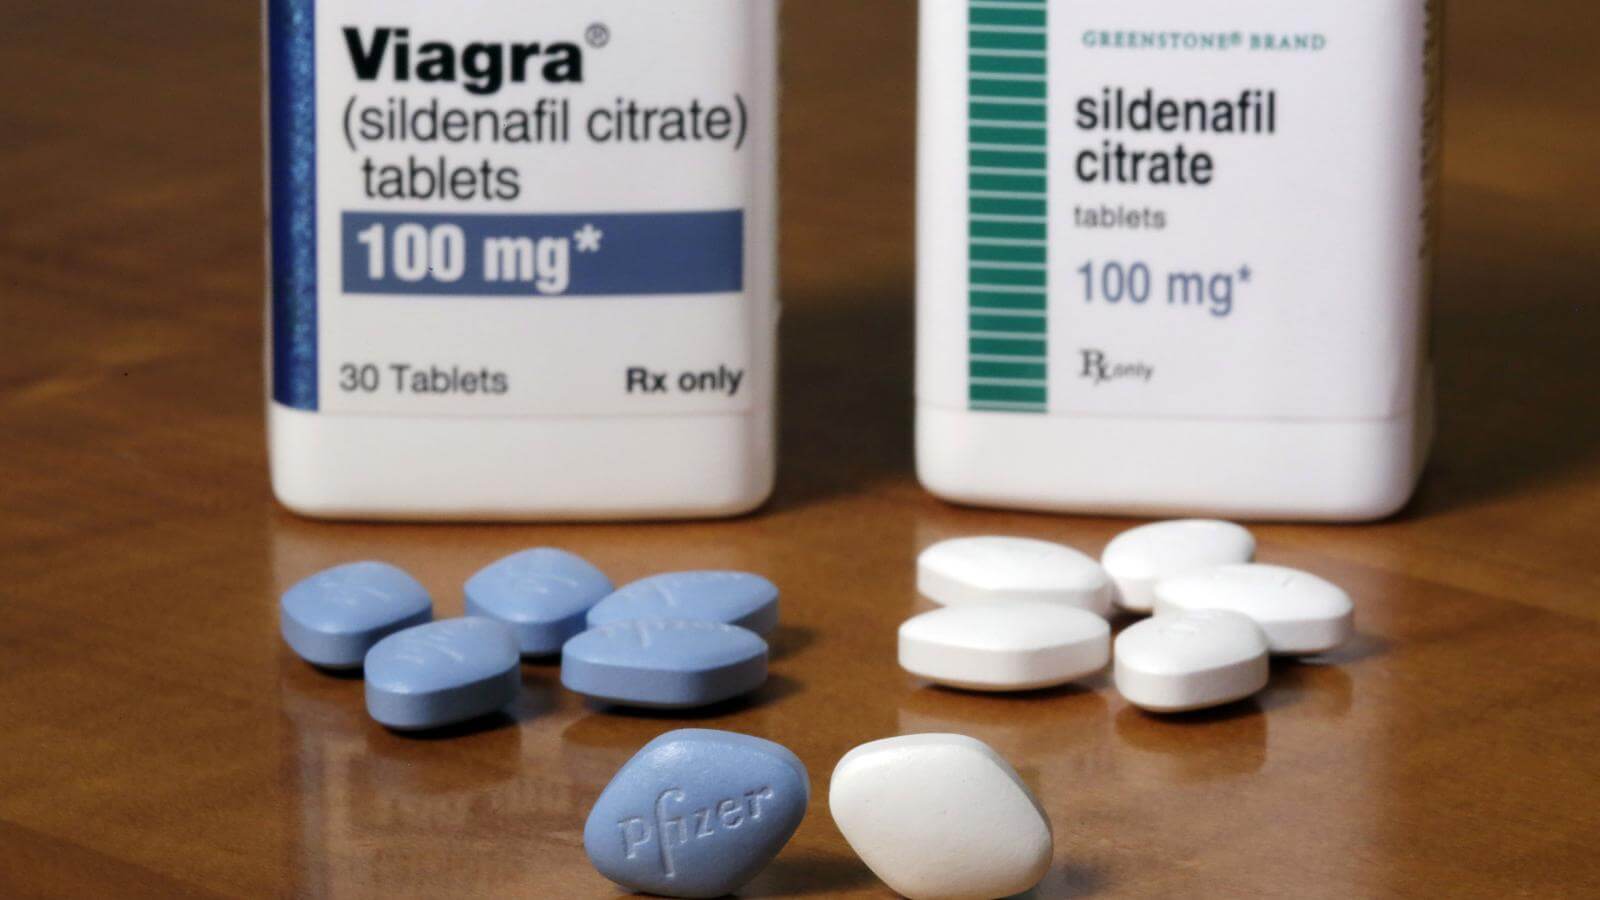 Viagra: Pills For Men to Keep Up an Active Sex Life